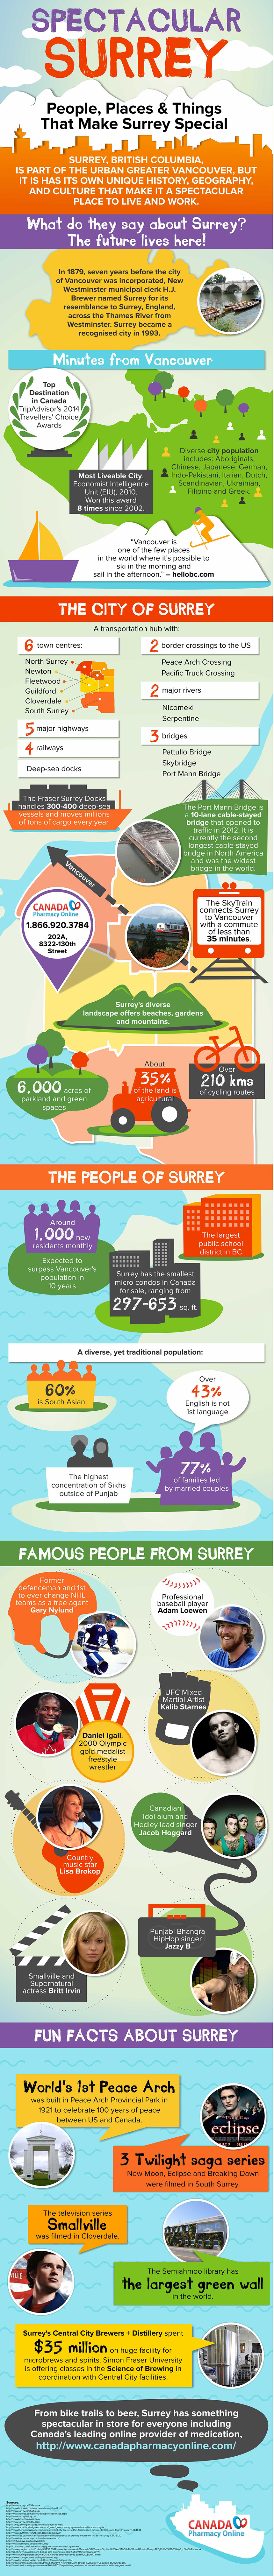 Infographic Spectacular Surrey